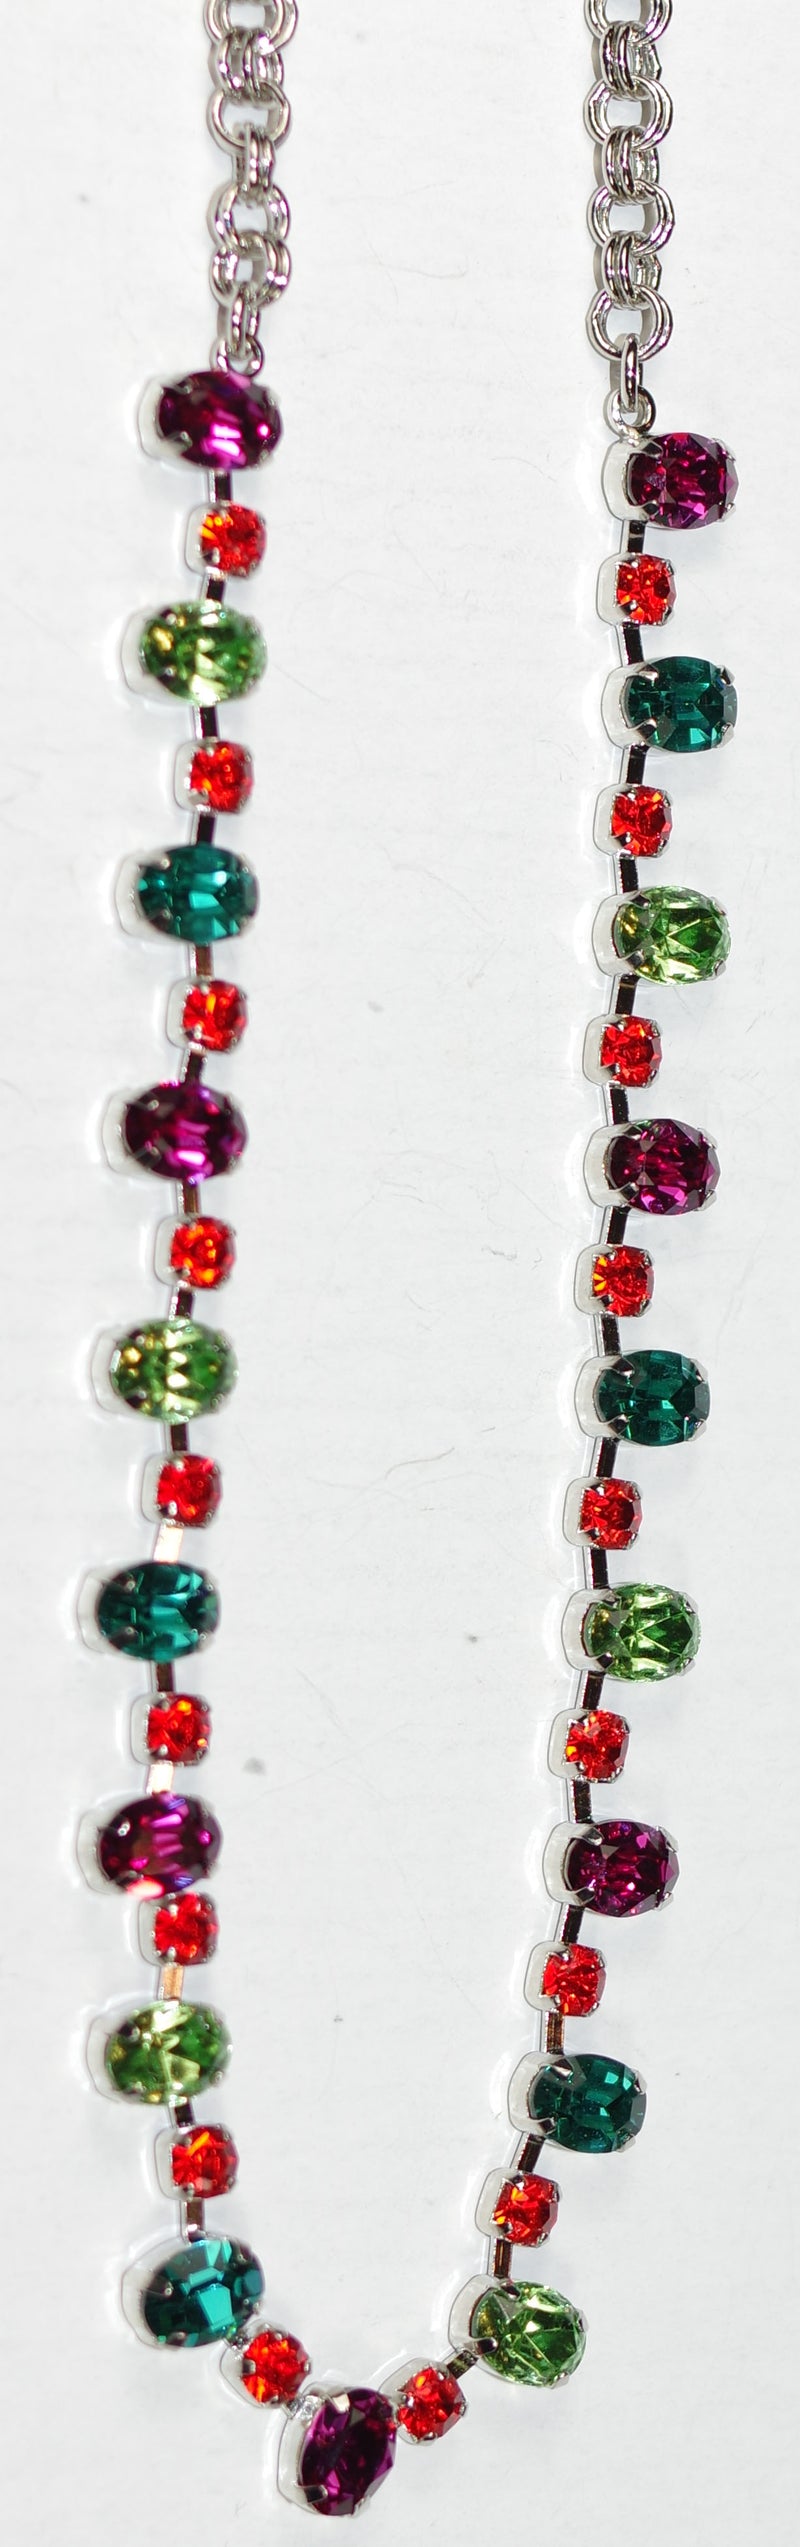 MARIANA NECKLACE RAINBOW SHERBERT: pink, green, orange, blue stones in silver rhodium setting, 18" adjustable chain